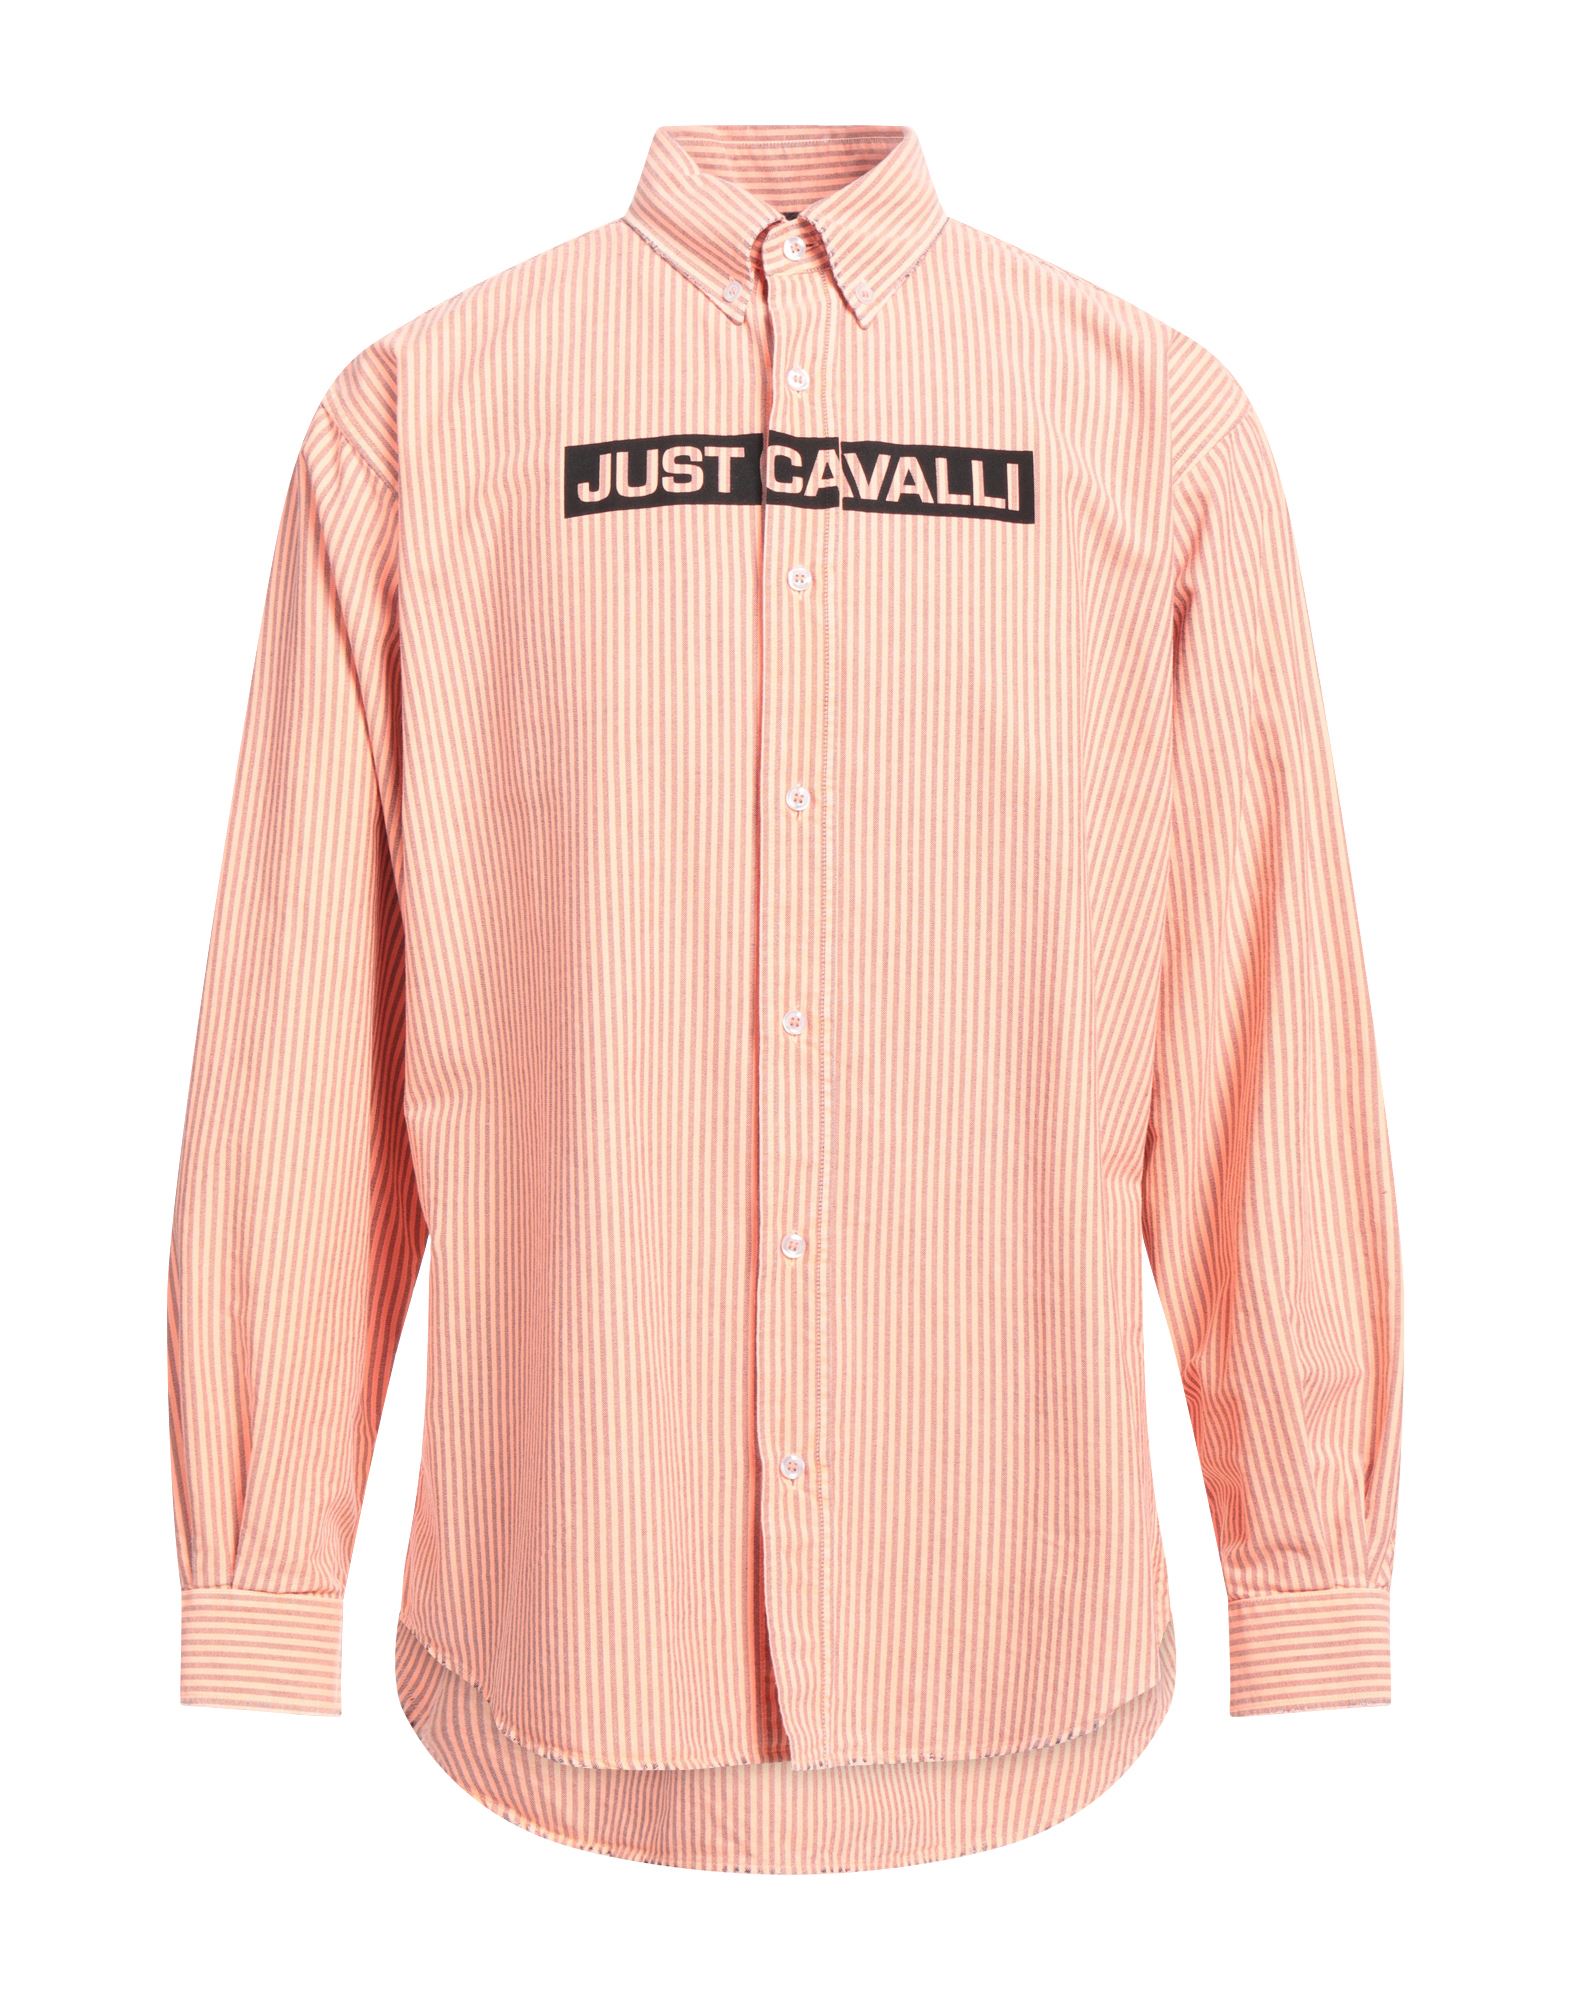 Just Cavalli Shirts In Orange